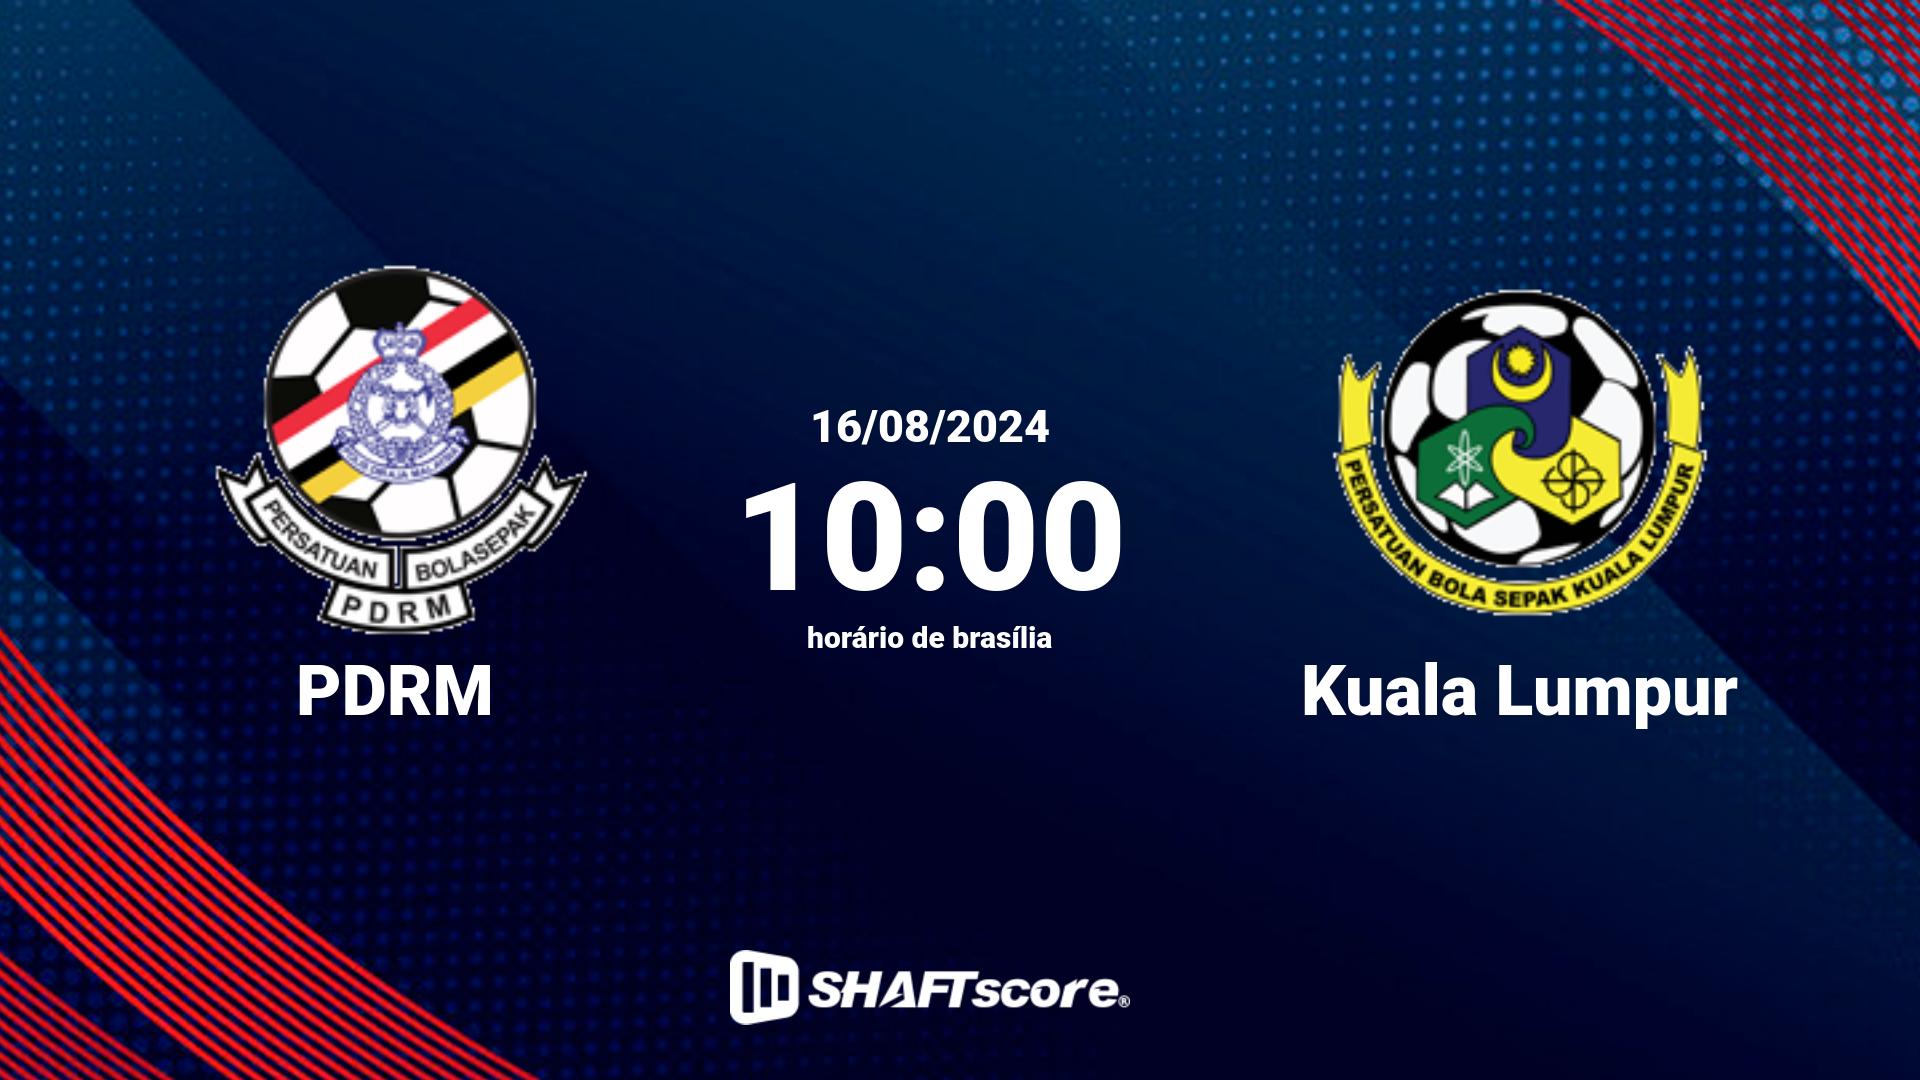 Estatísticas do jogo PDRM vs Kuala Lumpur 16.08 10:00